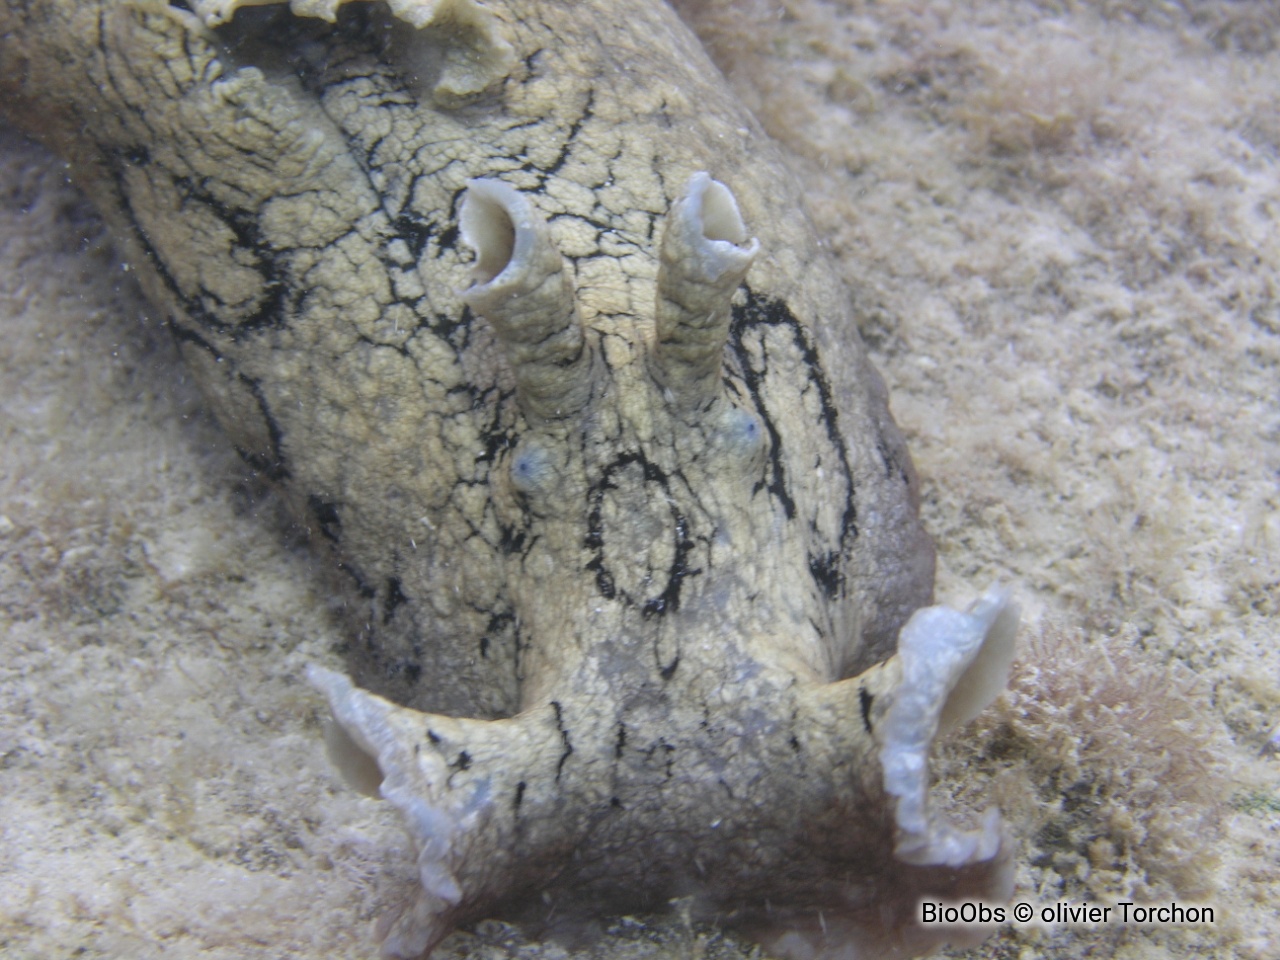 Lièvre de mer ocellé - Aplysia dactylomela - olivier Torchon - BioObs